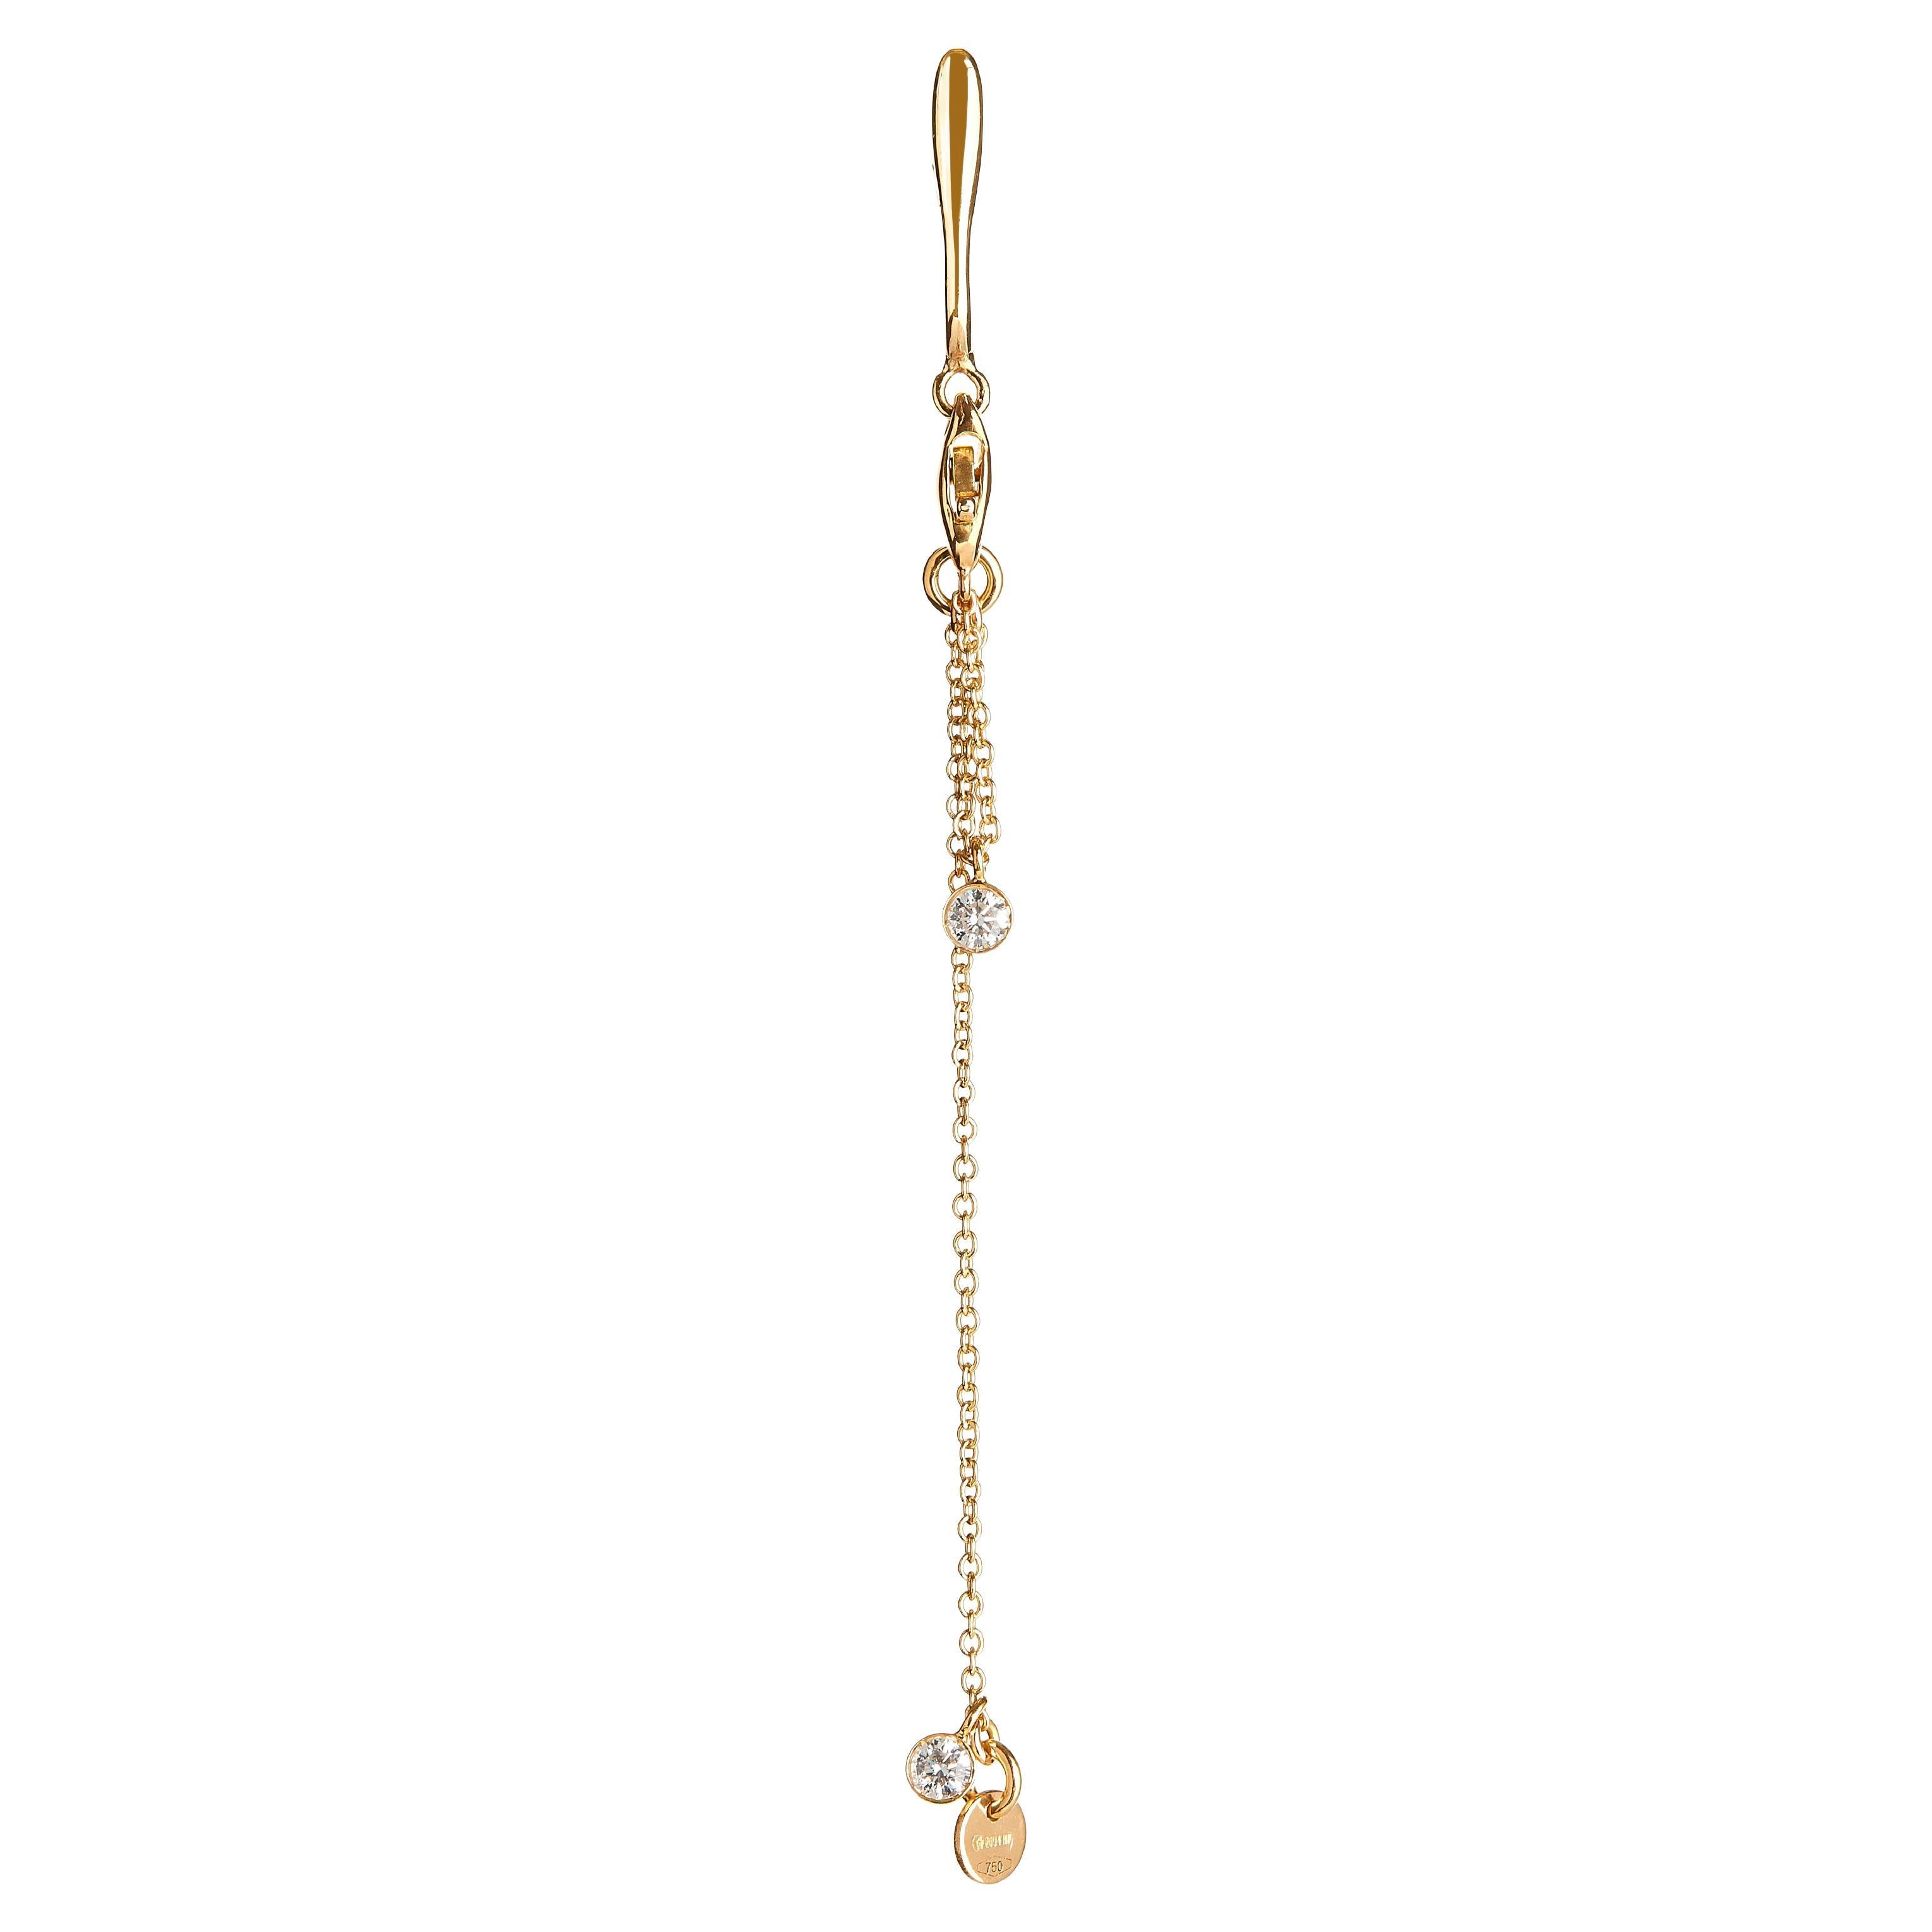 Nathalie Jean Contemporary 0.22 Carat Diamond Gold Pendant Drop Earring